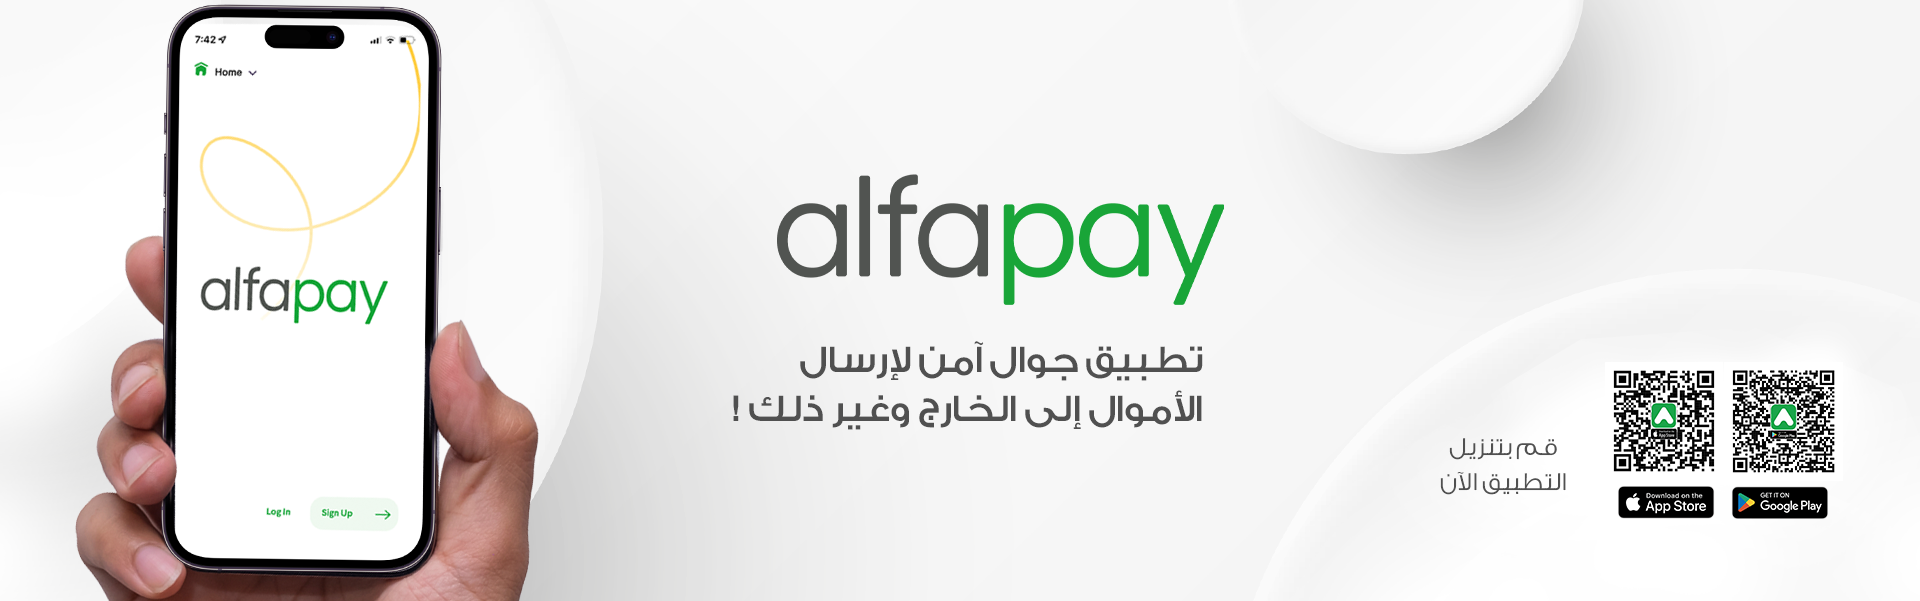 Alfapay Mobile Application